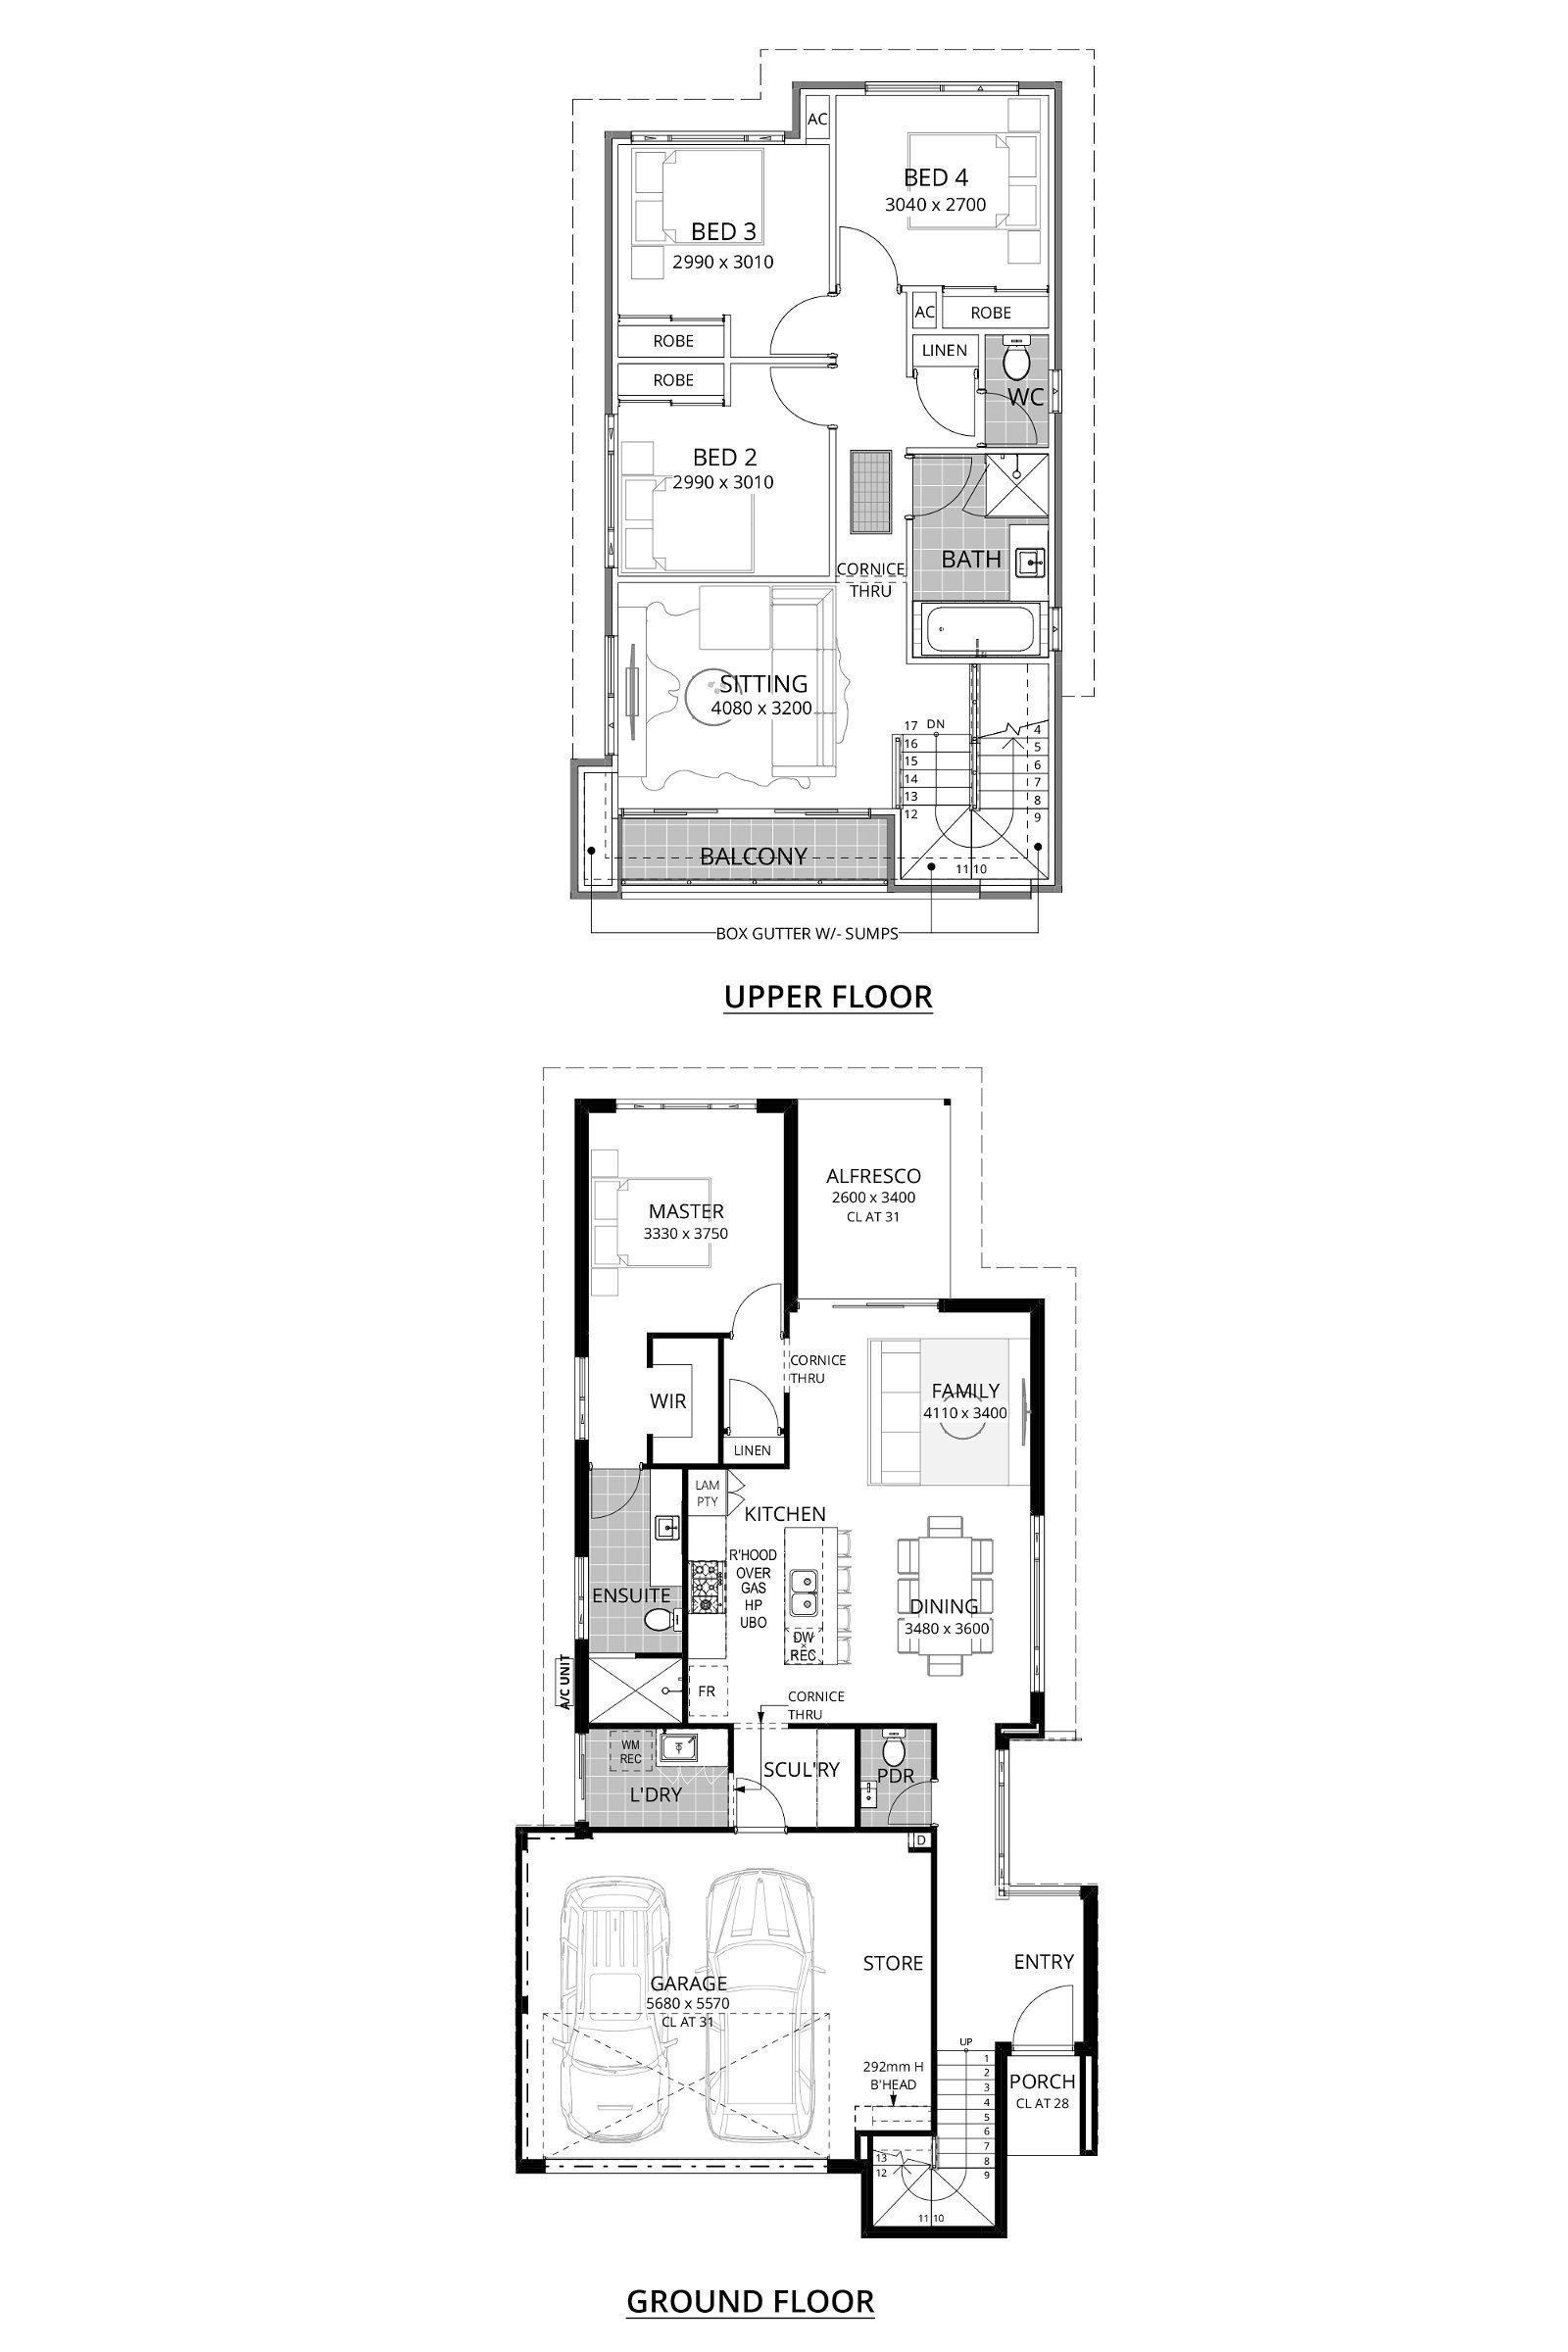 Residential Attitudes - Art House Executive - Floorplan - Art House Executive Website Floorplan